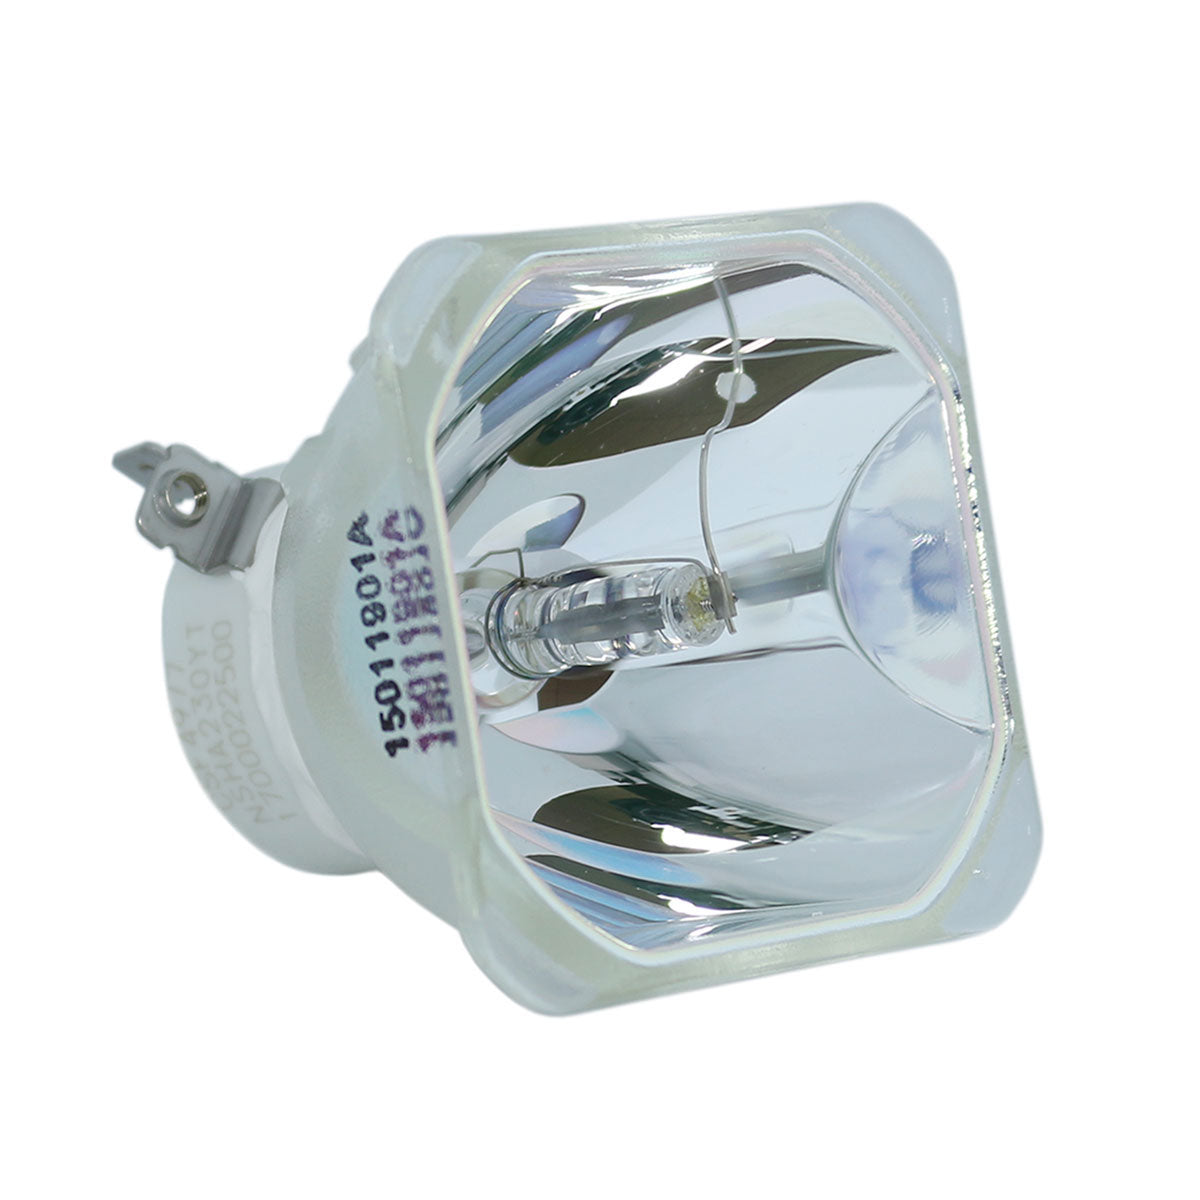 Hitachi DT01411 Ushio Projector Bare Lamp